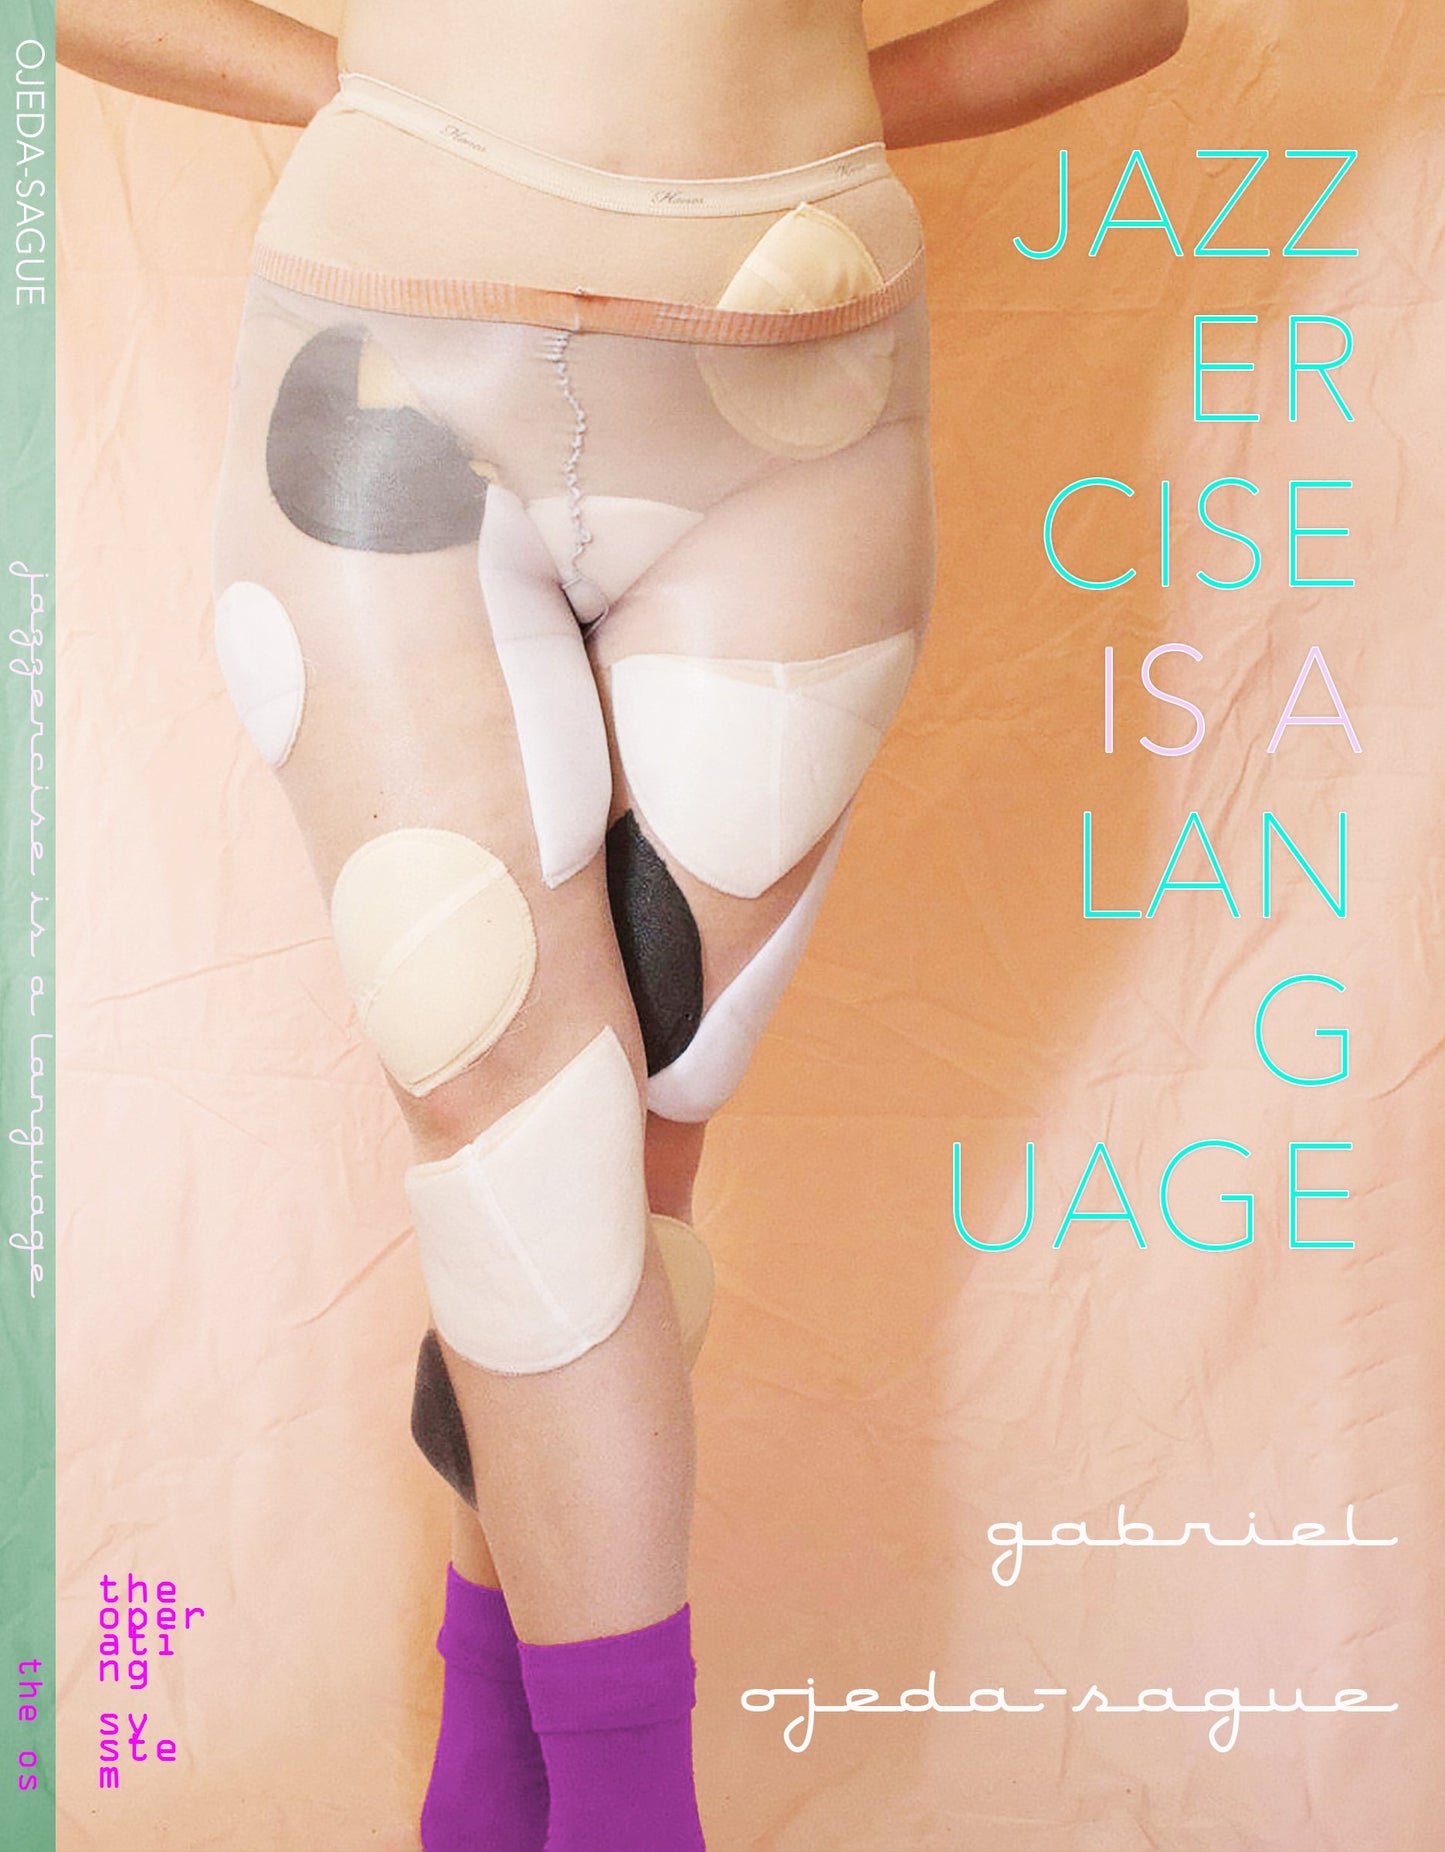 Jazzercise is a Language, by Gabriel Ojeda-Sague